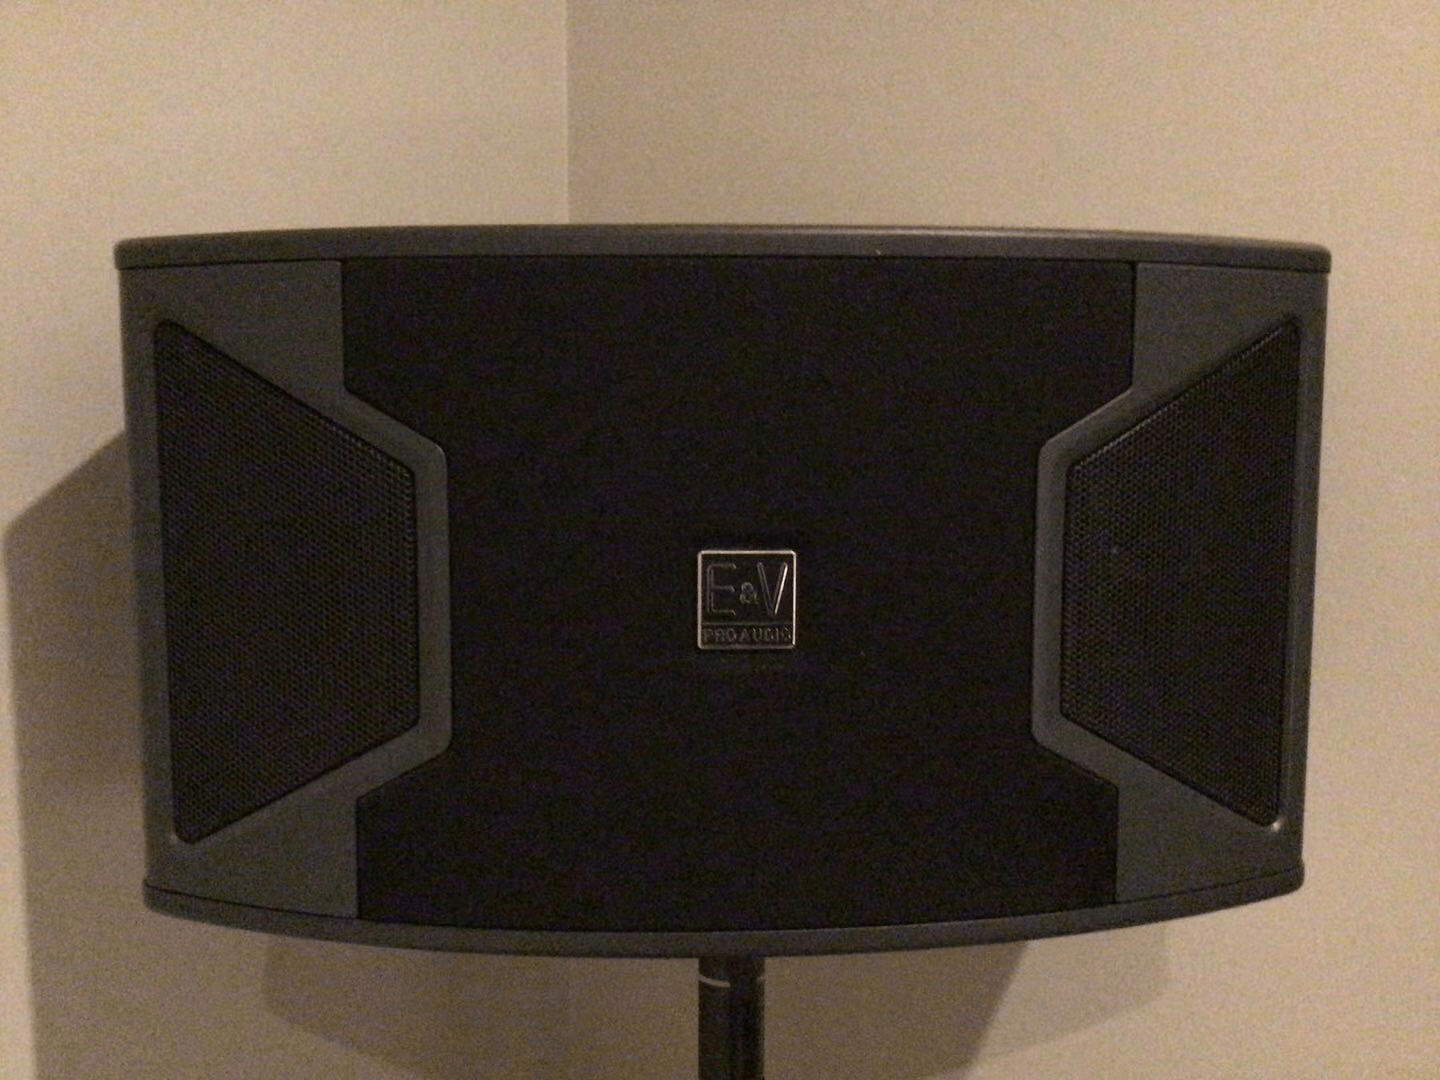 EV 10' Speaker K33, a pair of main speakers - YOURISHOP.COM